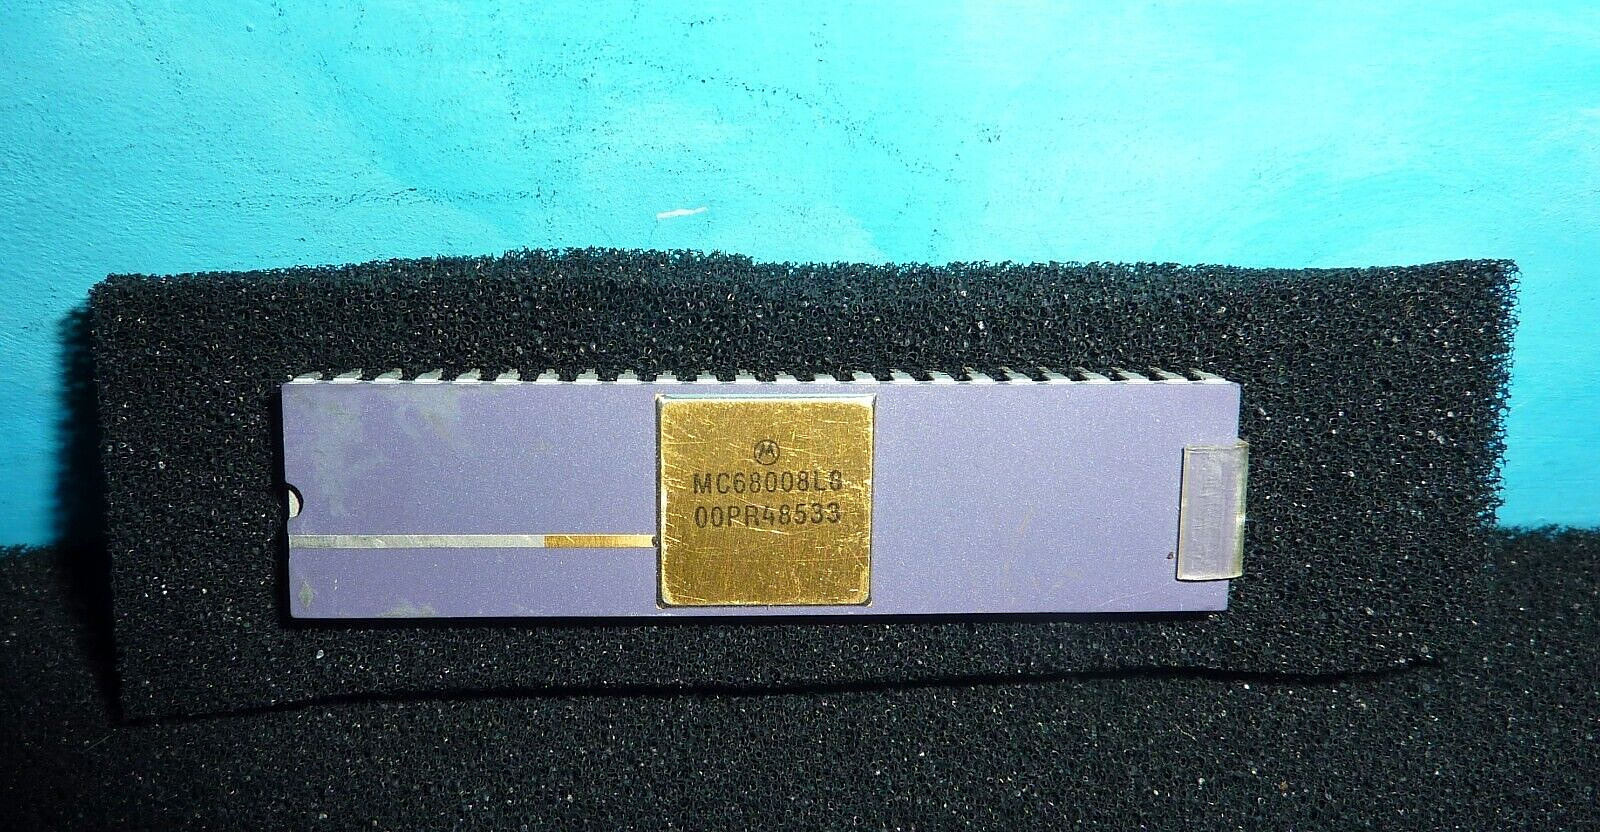 Motorola MC68008L8 Purple Ceramic/Gold DIP Collectible Microprocessor